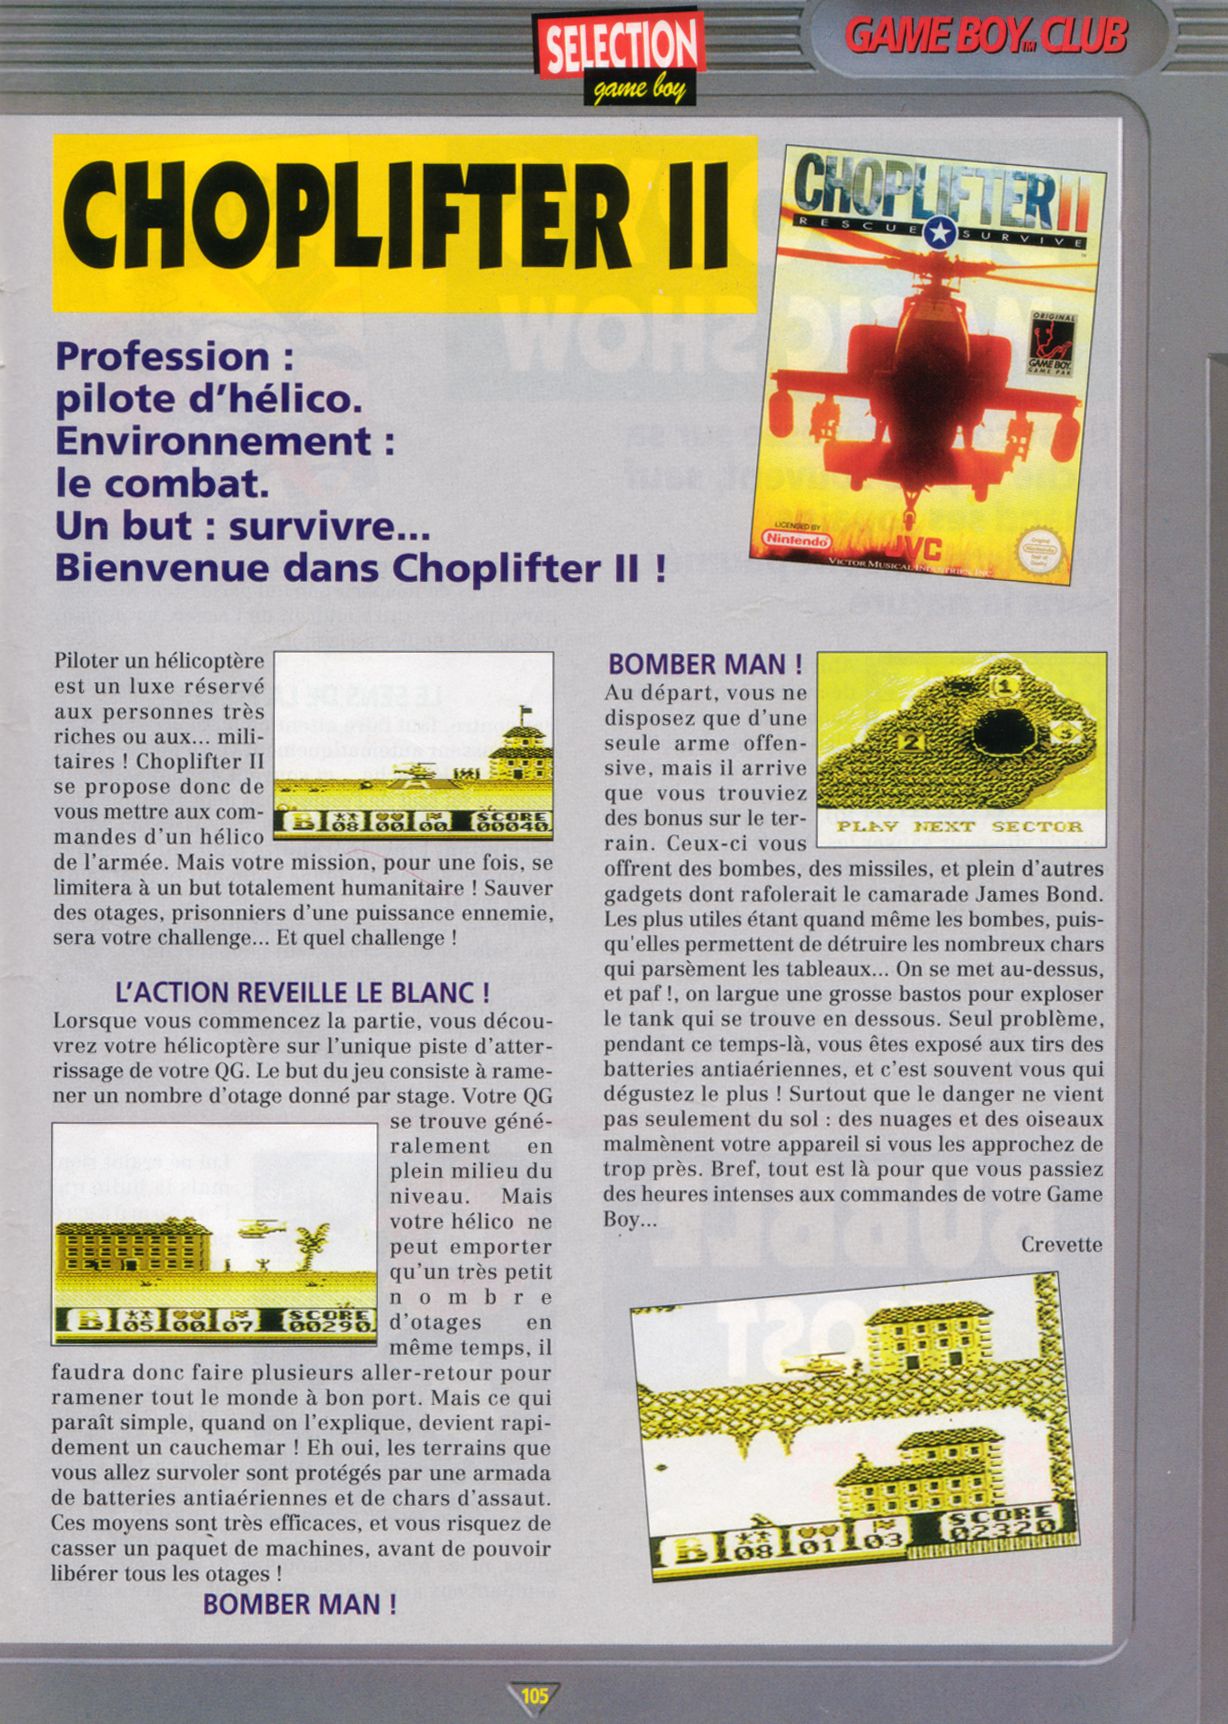 tests//1309/Nintendo Player 004 - Page 105 (1992-05-06).jpg